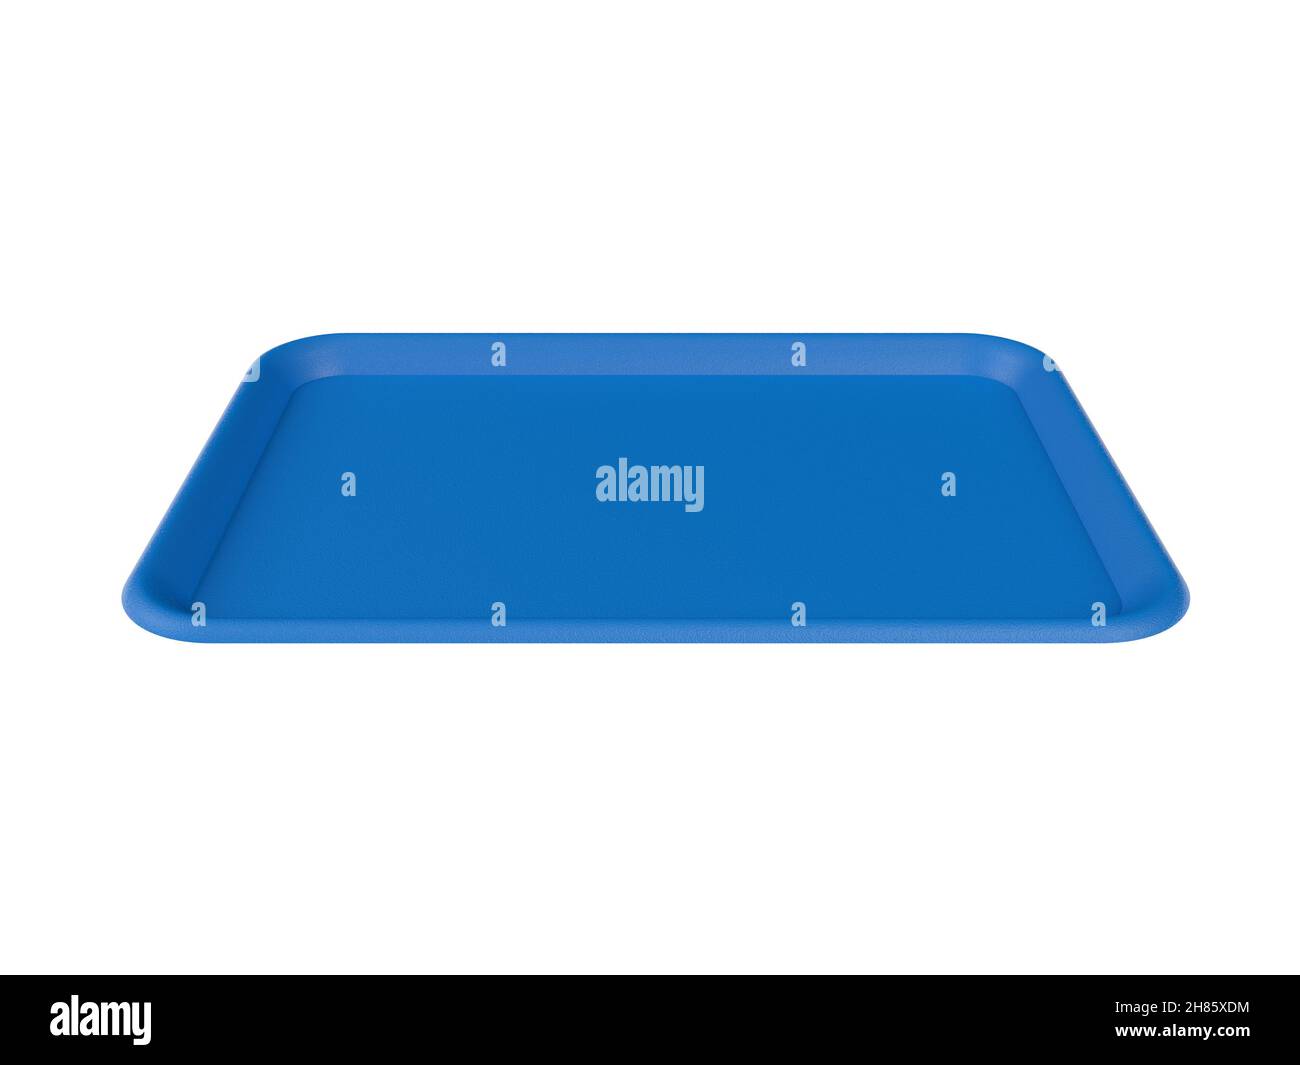 Empty blue plastic tray isolated on white background. 3d illustration. Stock Photo